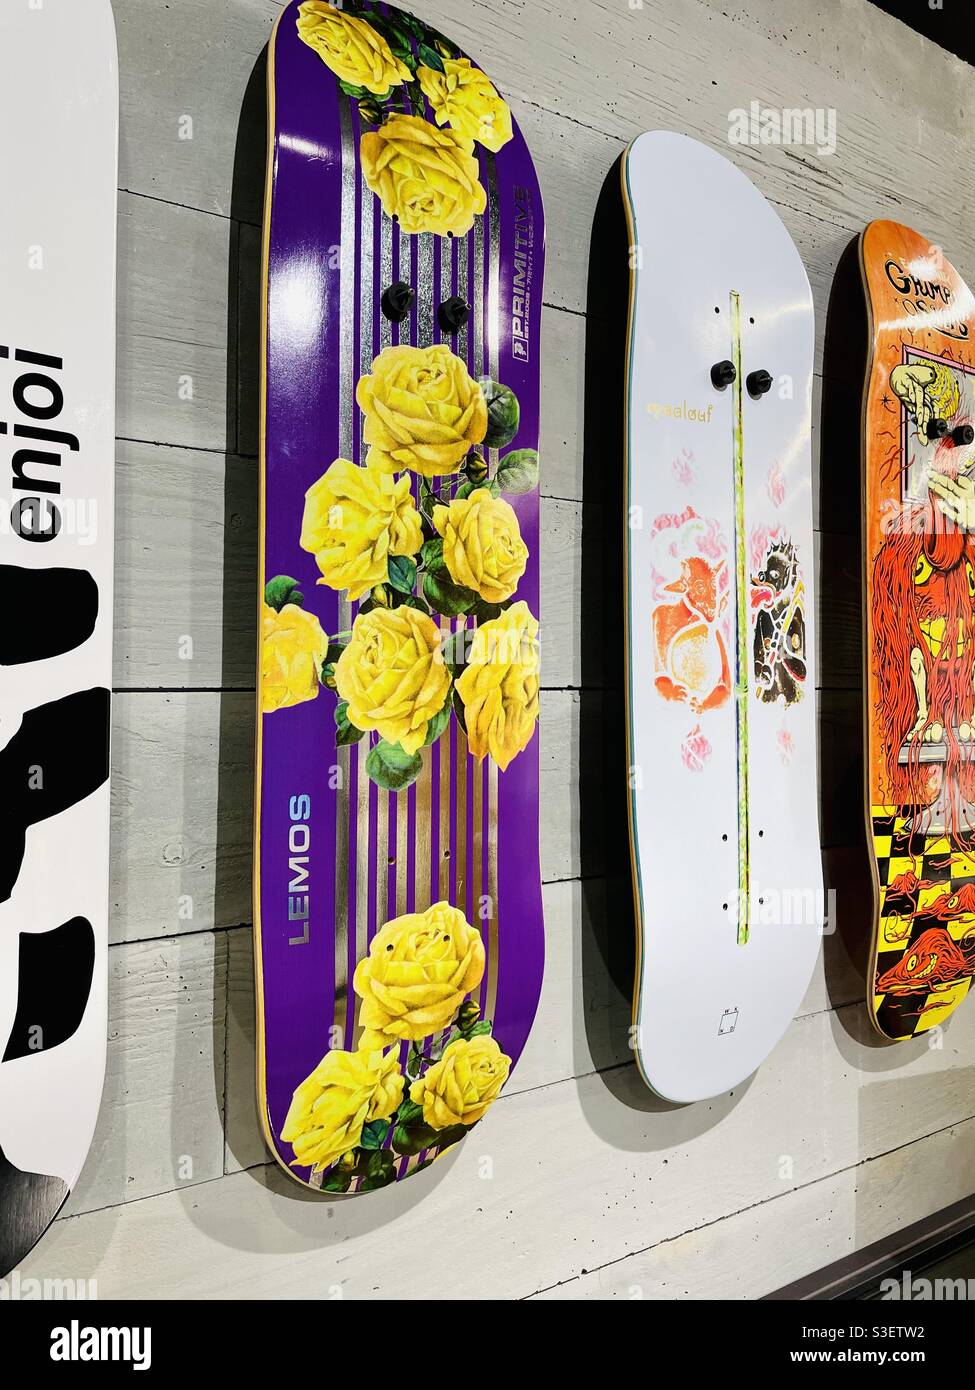 ventilation Vilje ubehag Skateboards on display at vans off-the-wall retail store, NYC, USA Stock  Photo - Alamy